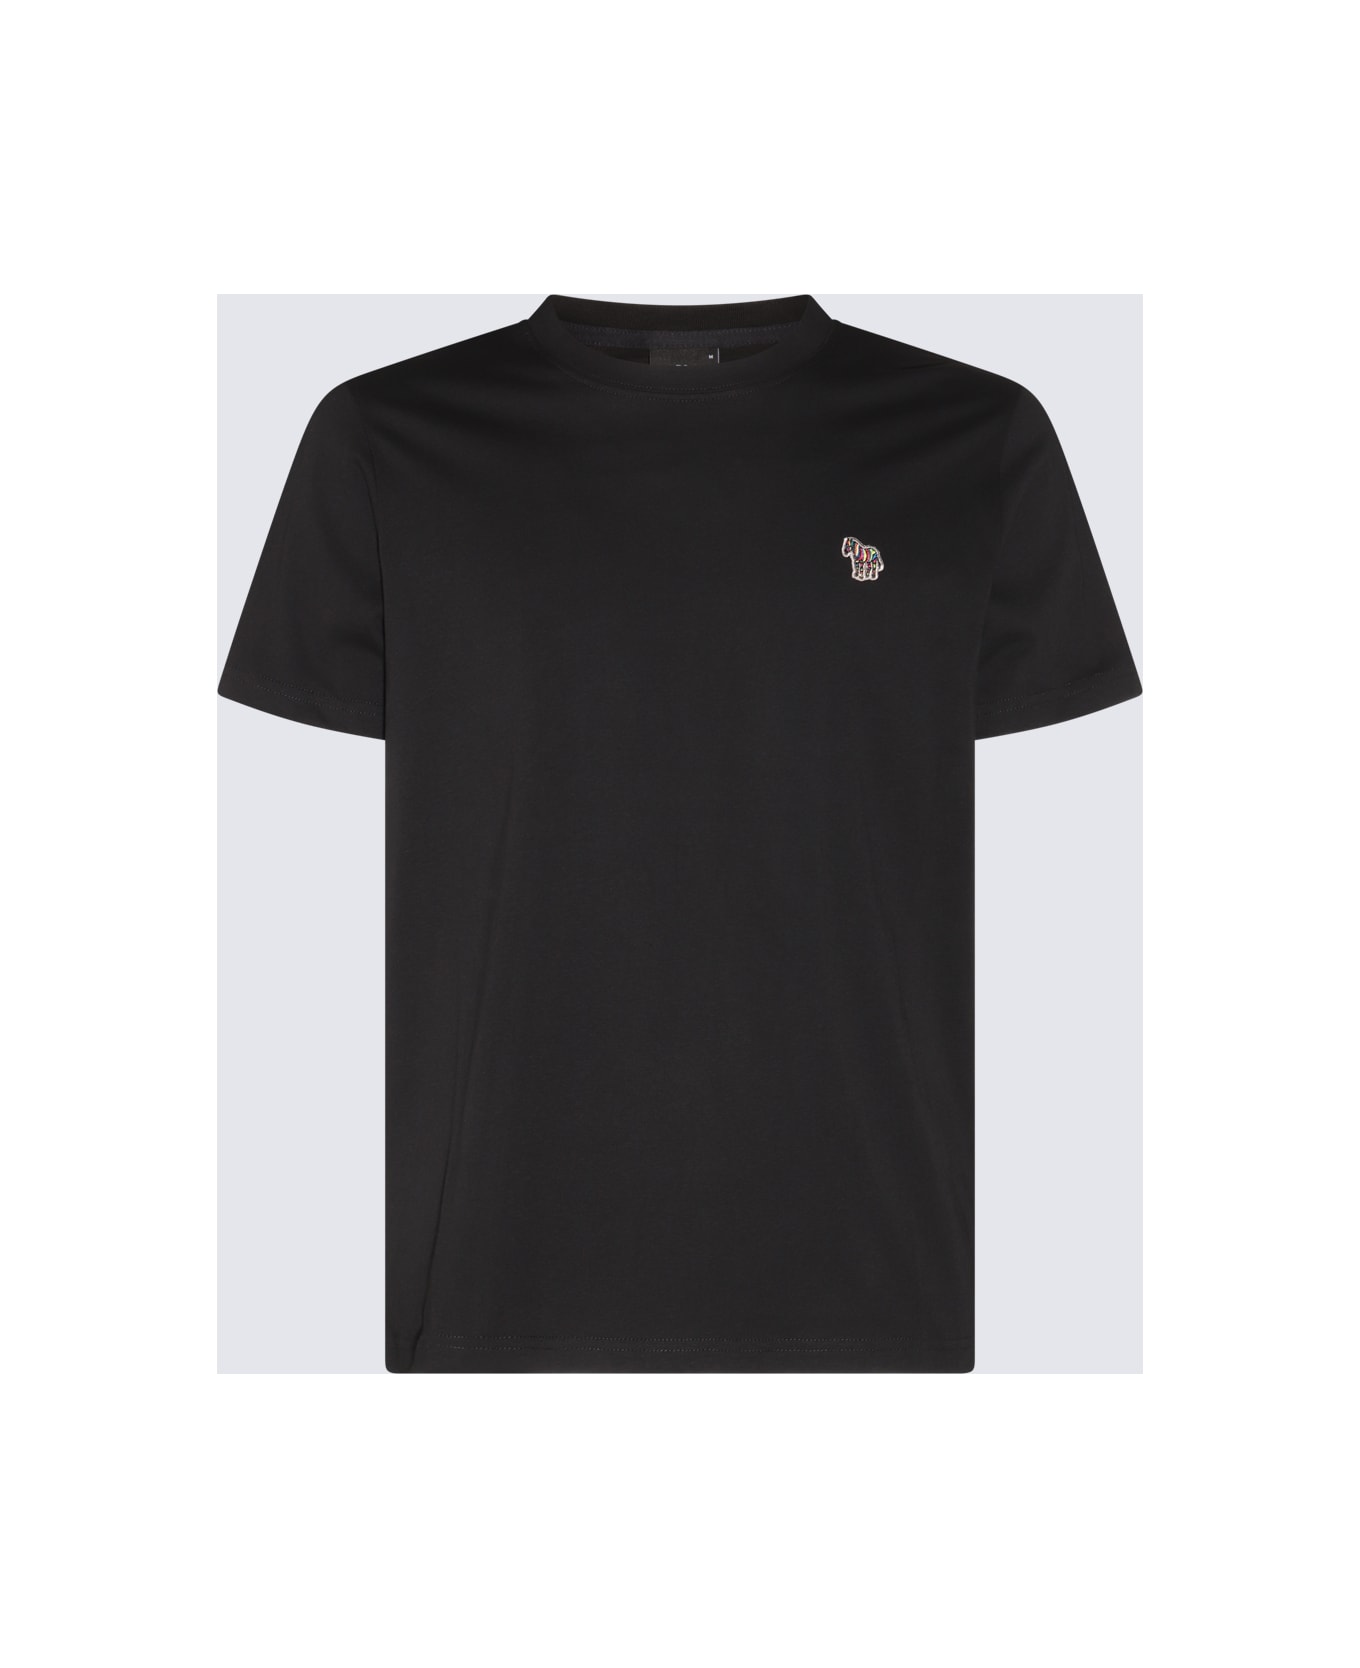 Paul Smith Black Cotton T-shirt シャツ